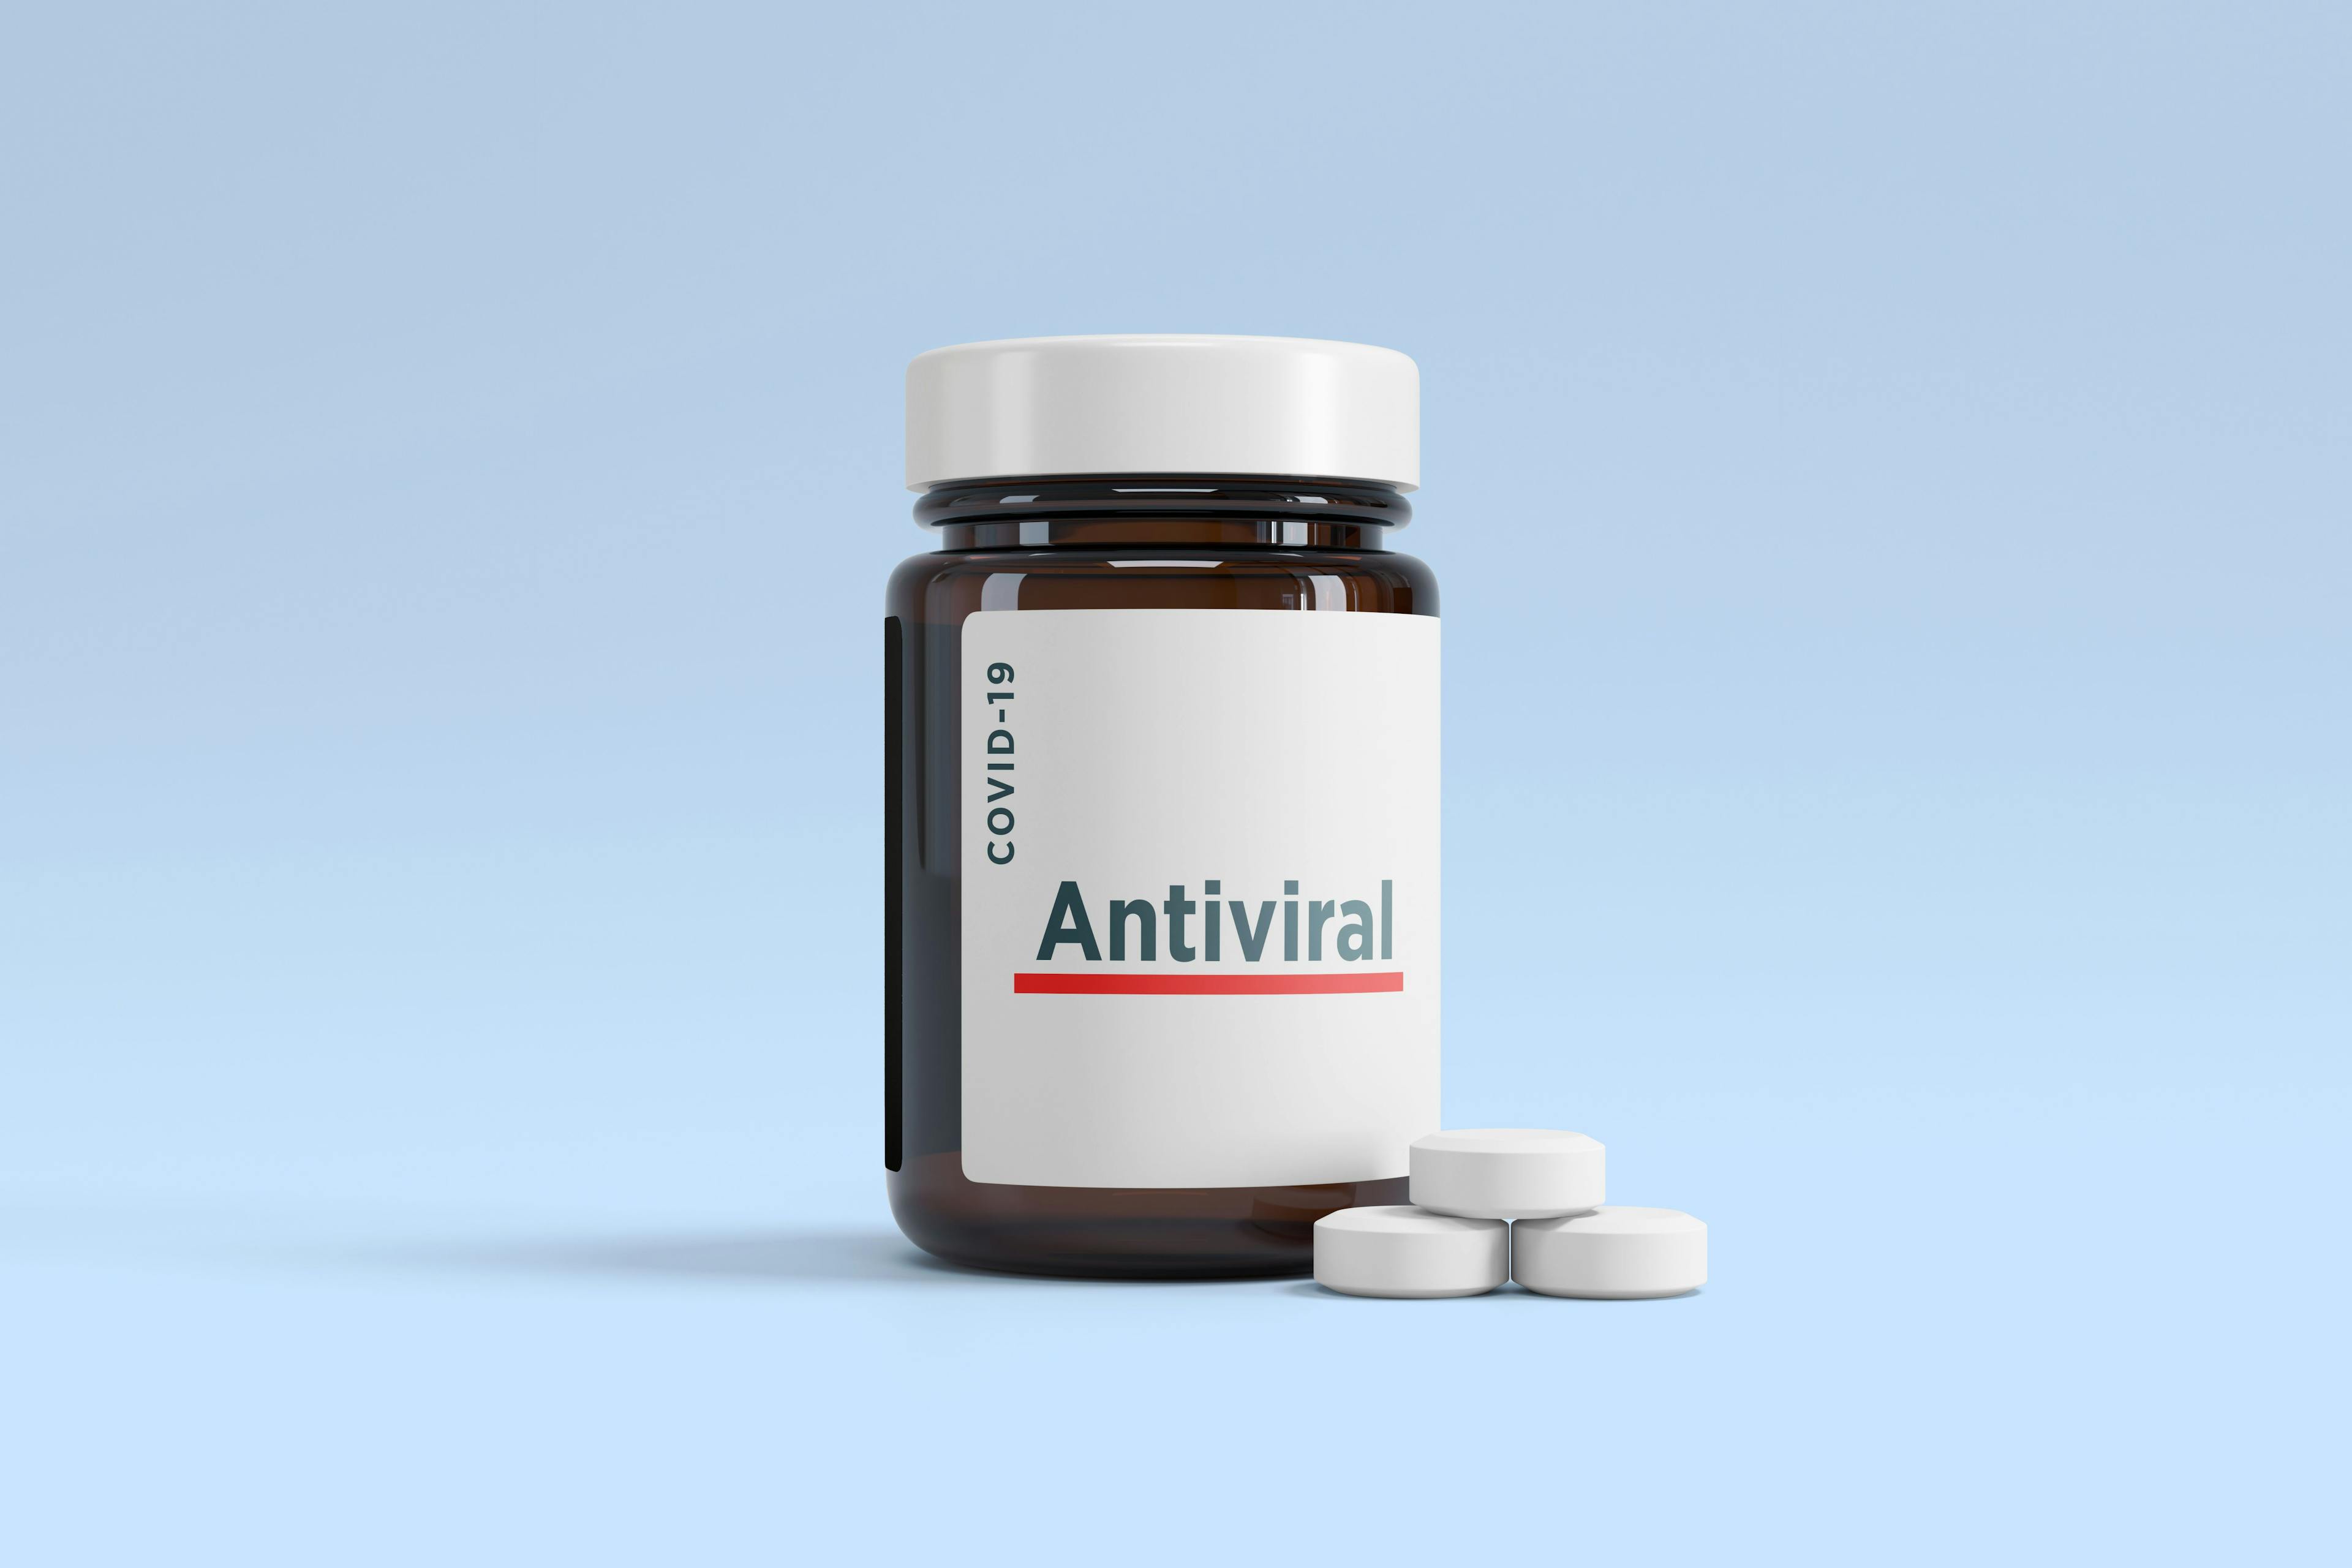 antiviral drugs, anti-viral drug against COVID-19 virus or coronavirus, | Image Credit: © Ahmet Aglamaz - stock.adobe.com